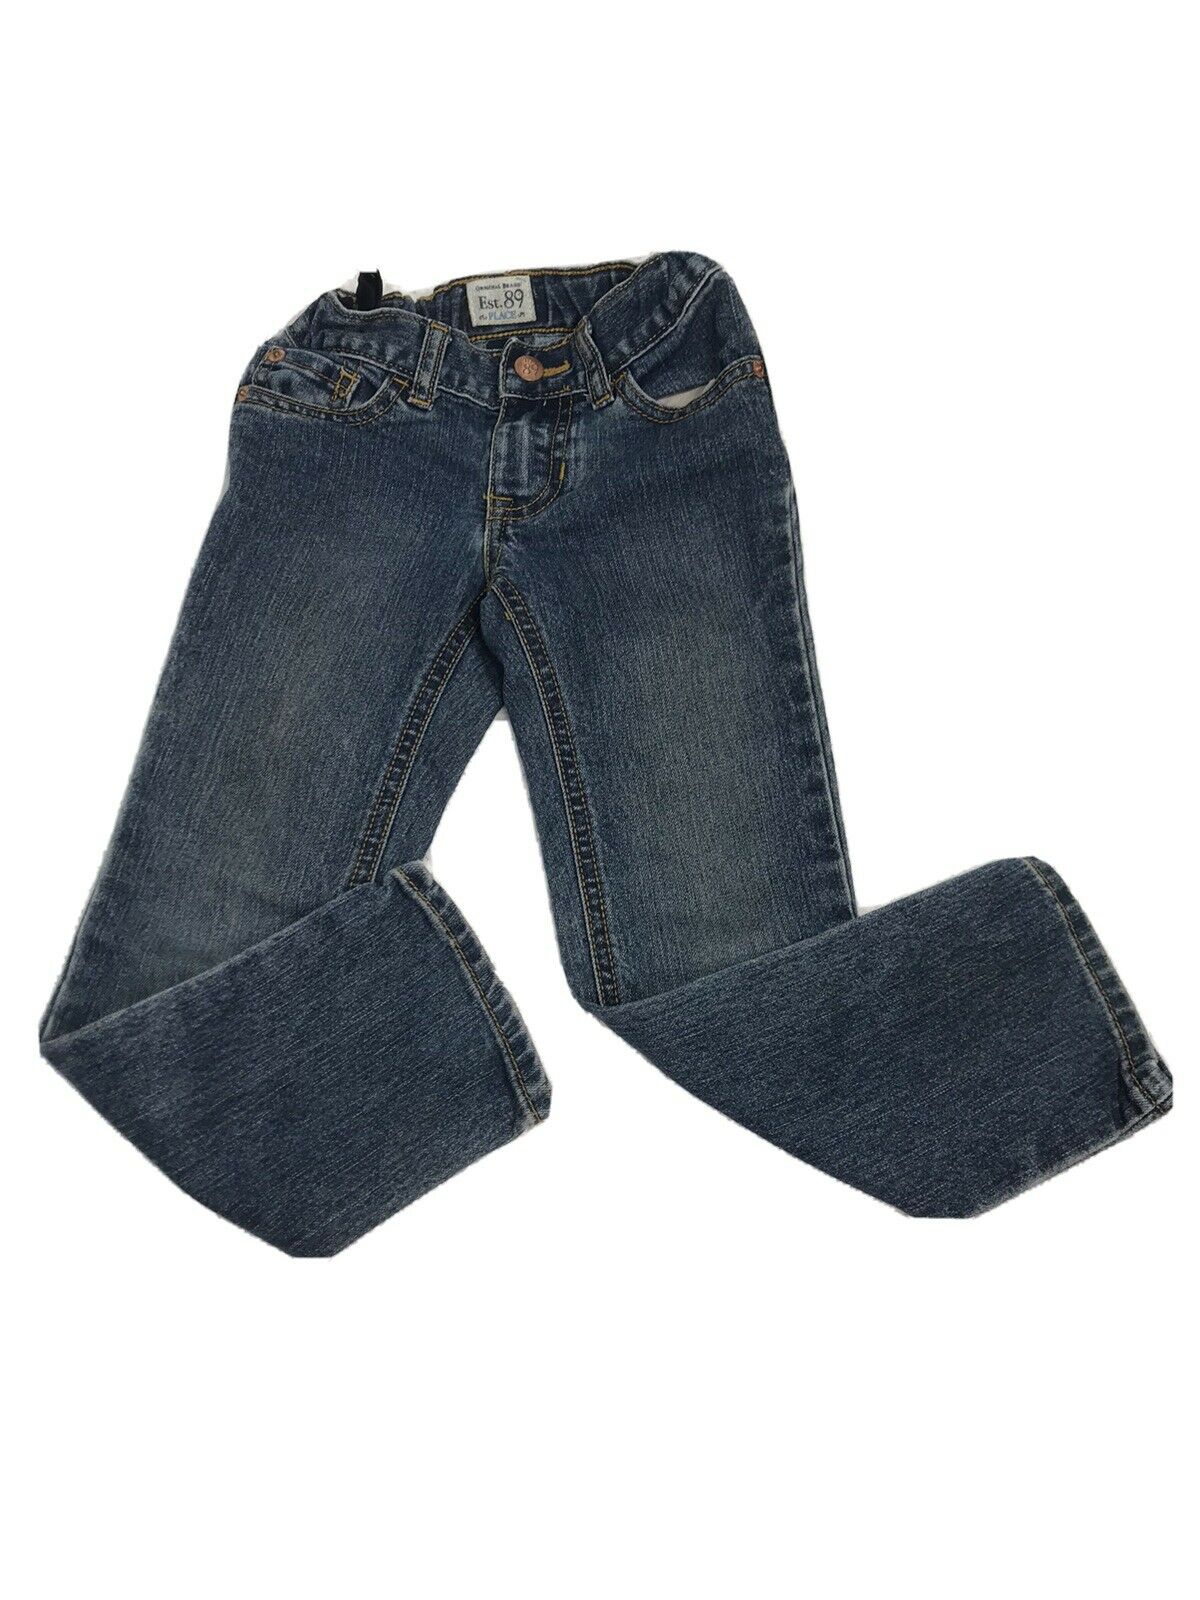 Children's Place Jeans Sz 5 Adjustable Waist Skinny  Stretch- Heart Pocket *euc